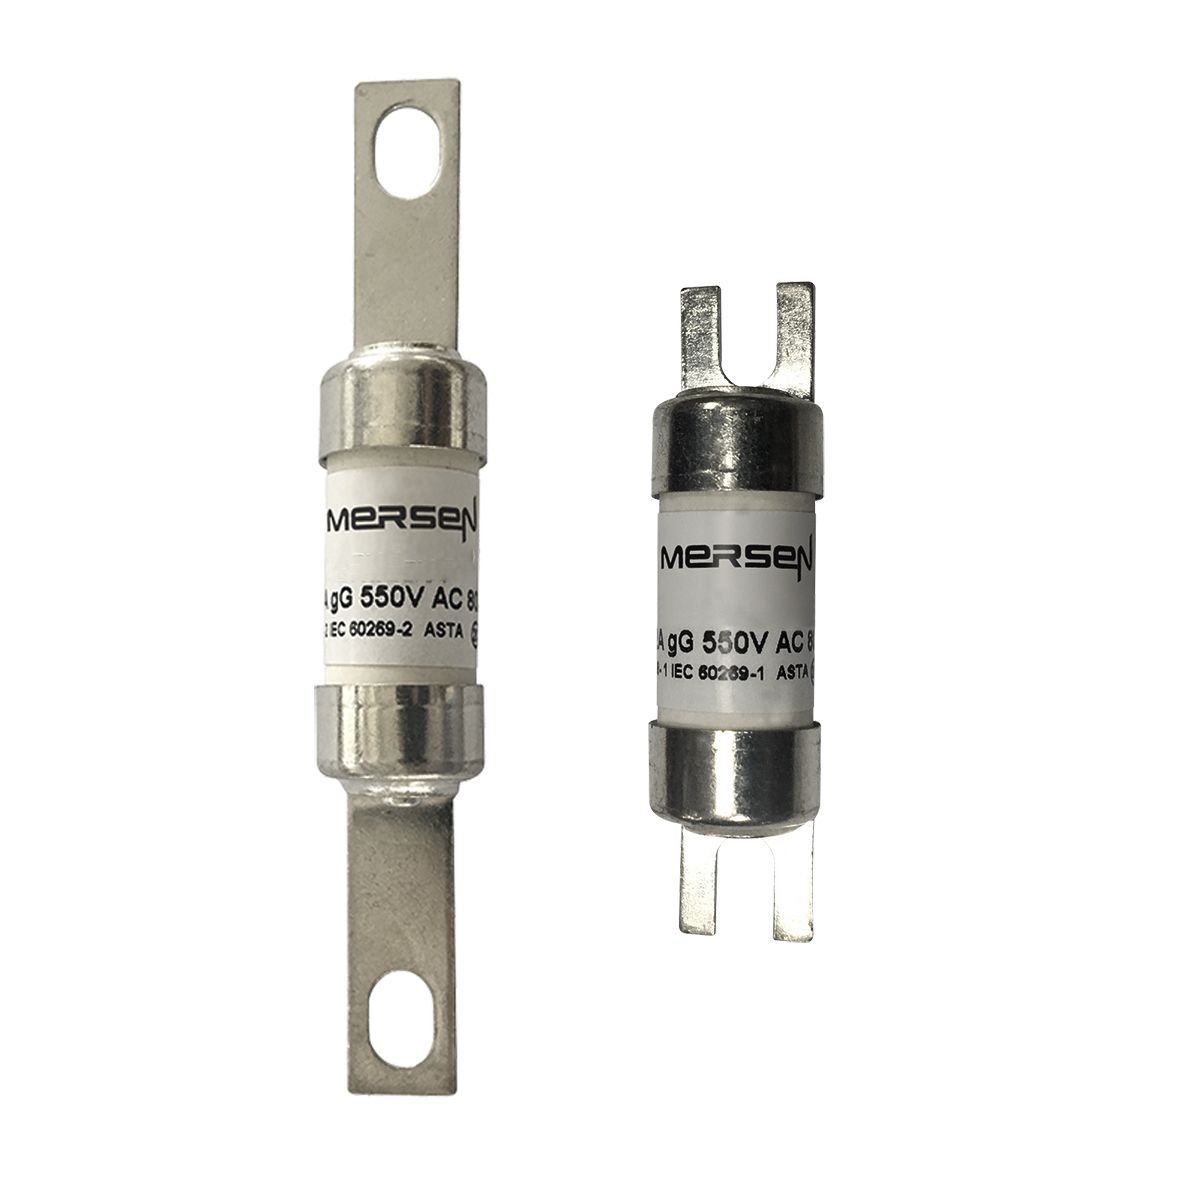 E1006576 - Offset Tag fuse-links gG BNIT 550VAC/250VDC 2A